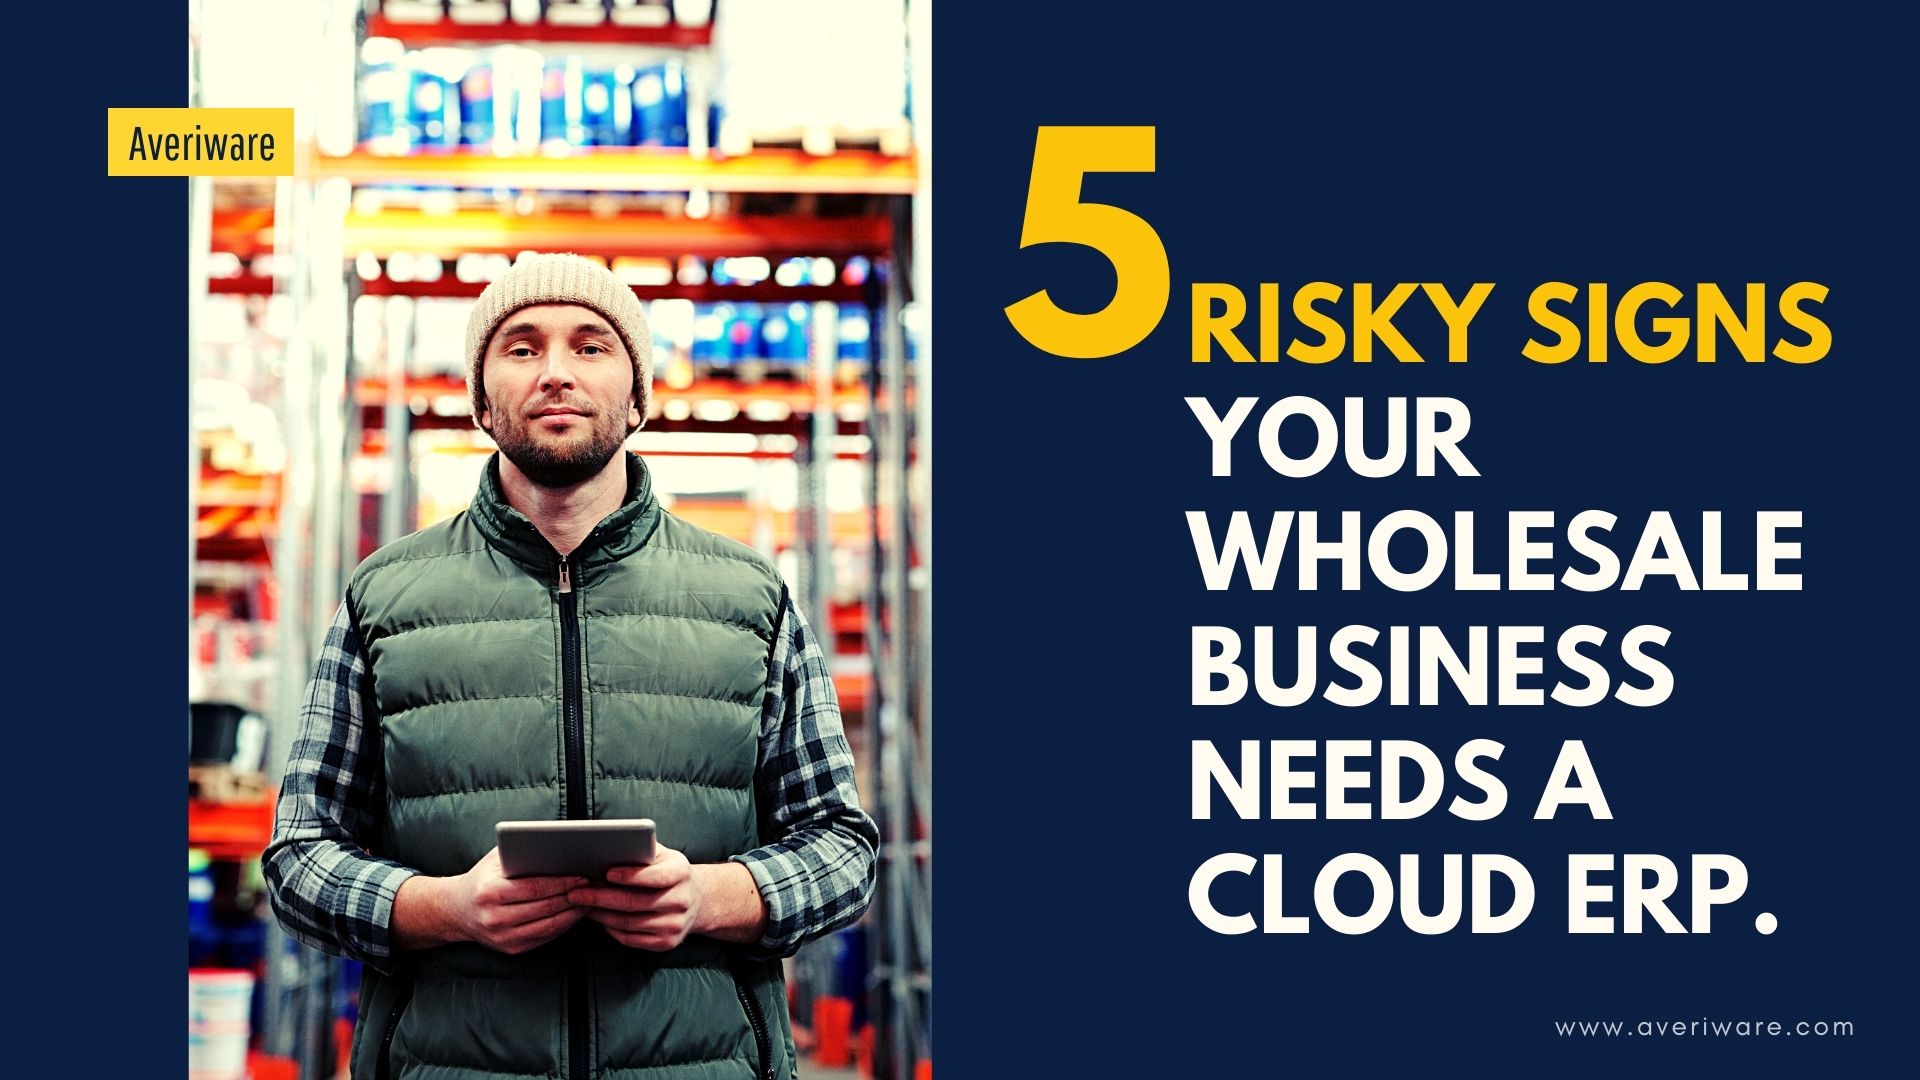 Risky Signs Your Wholesale business needs a Cloud ERP.